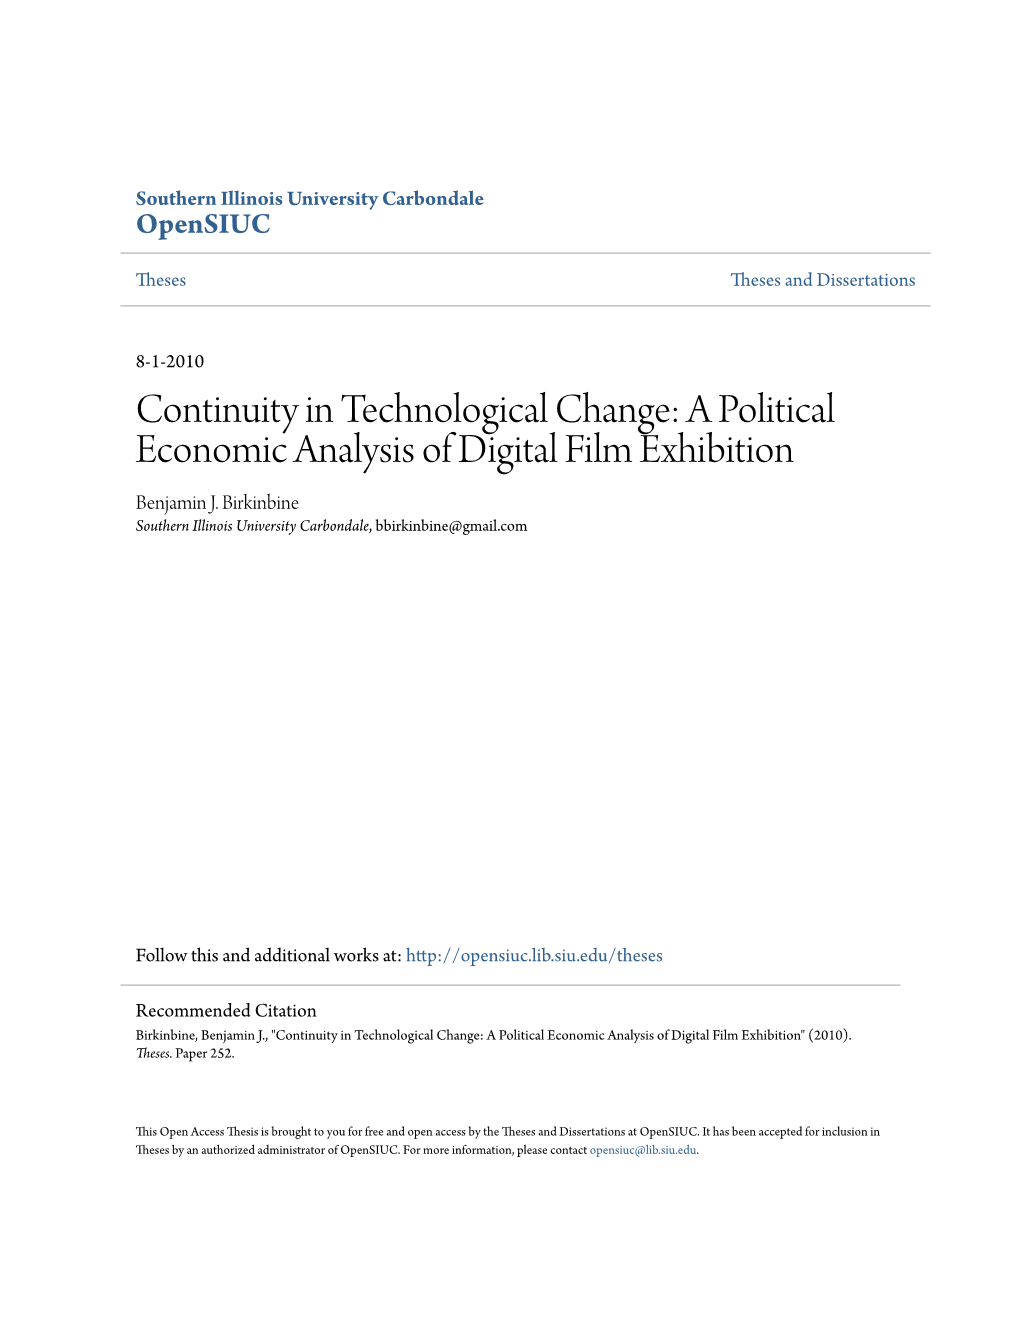 A Political Economic Analysis of Digital Film Exhibition Benjamin J